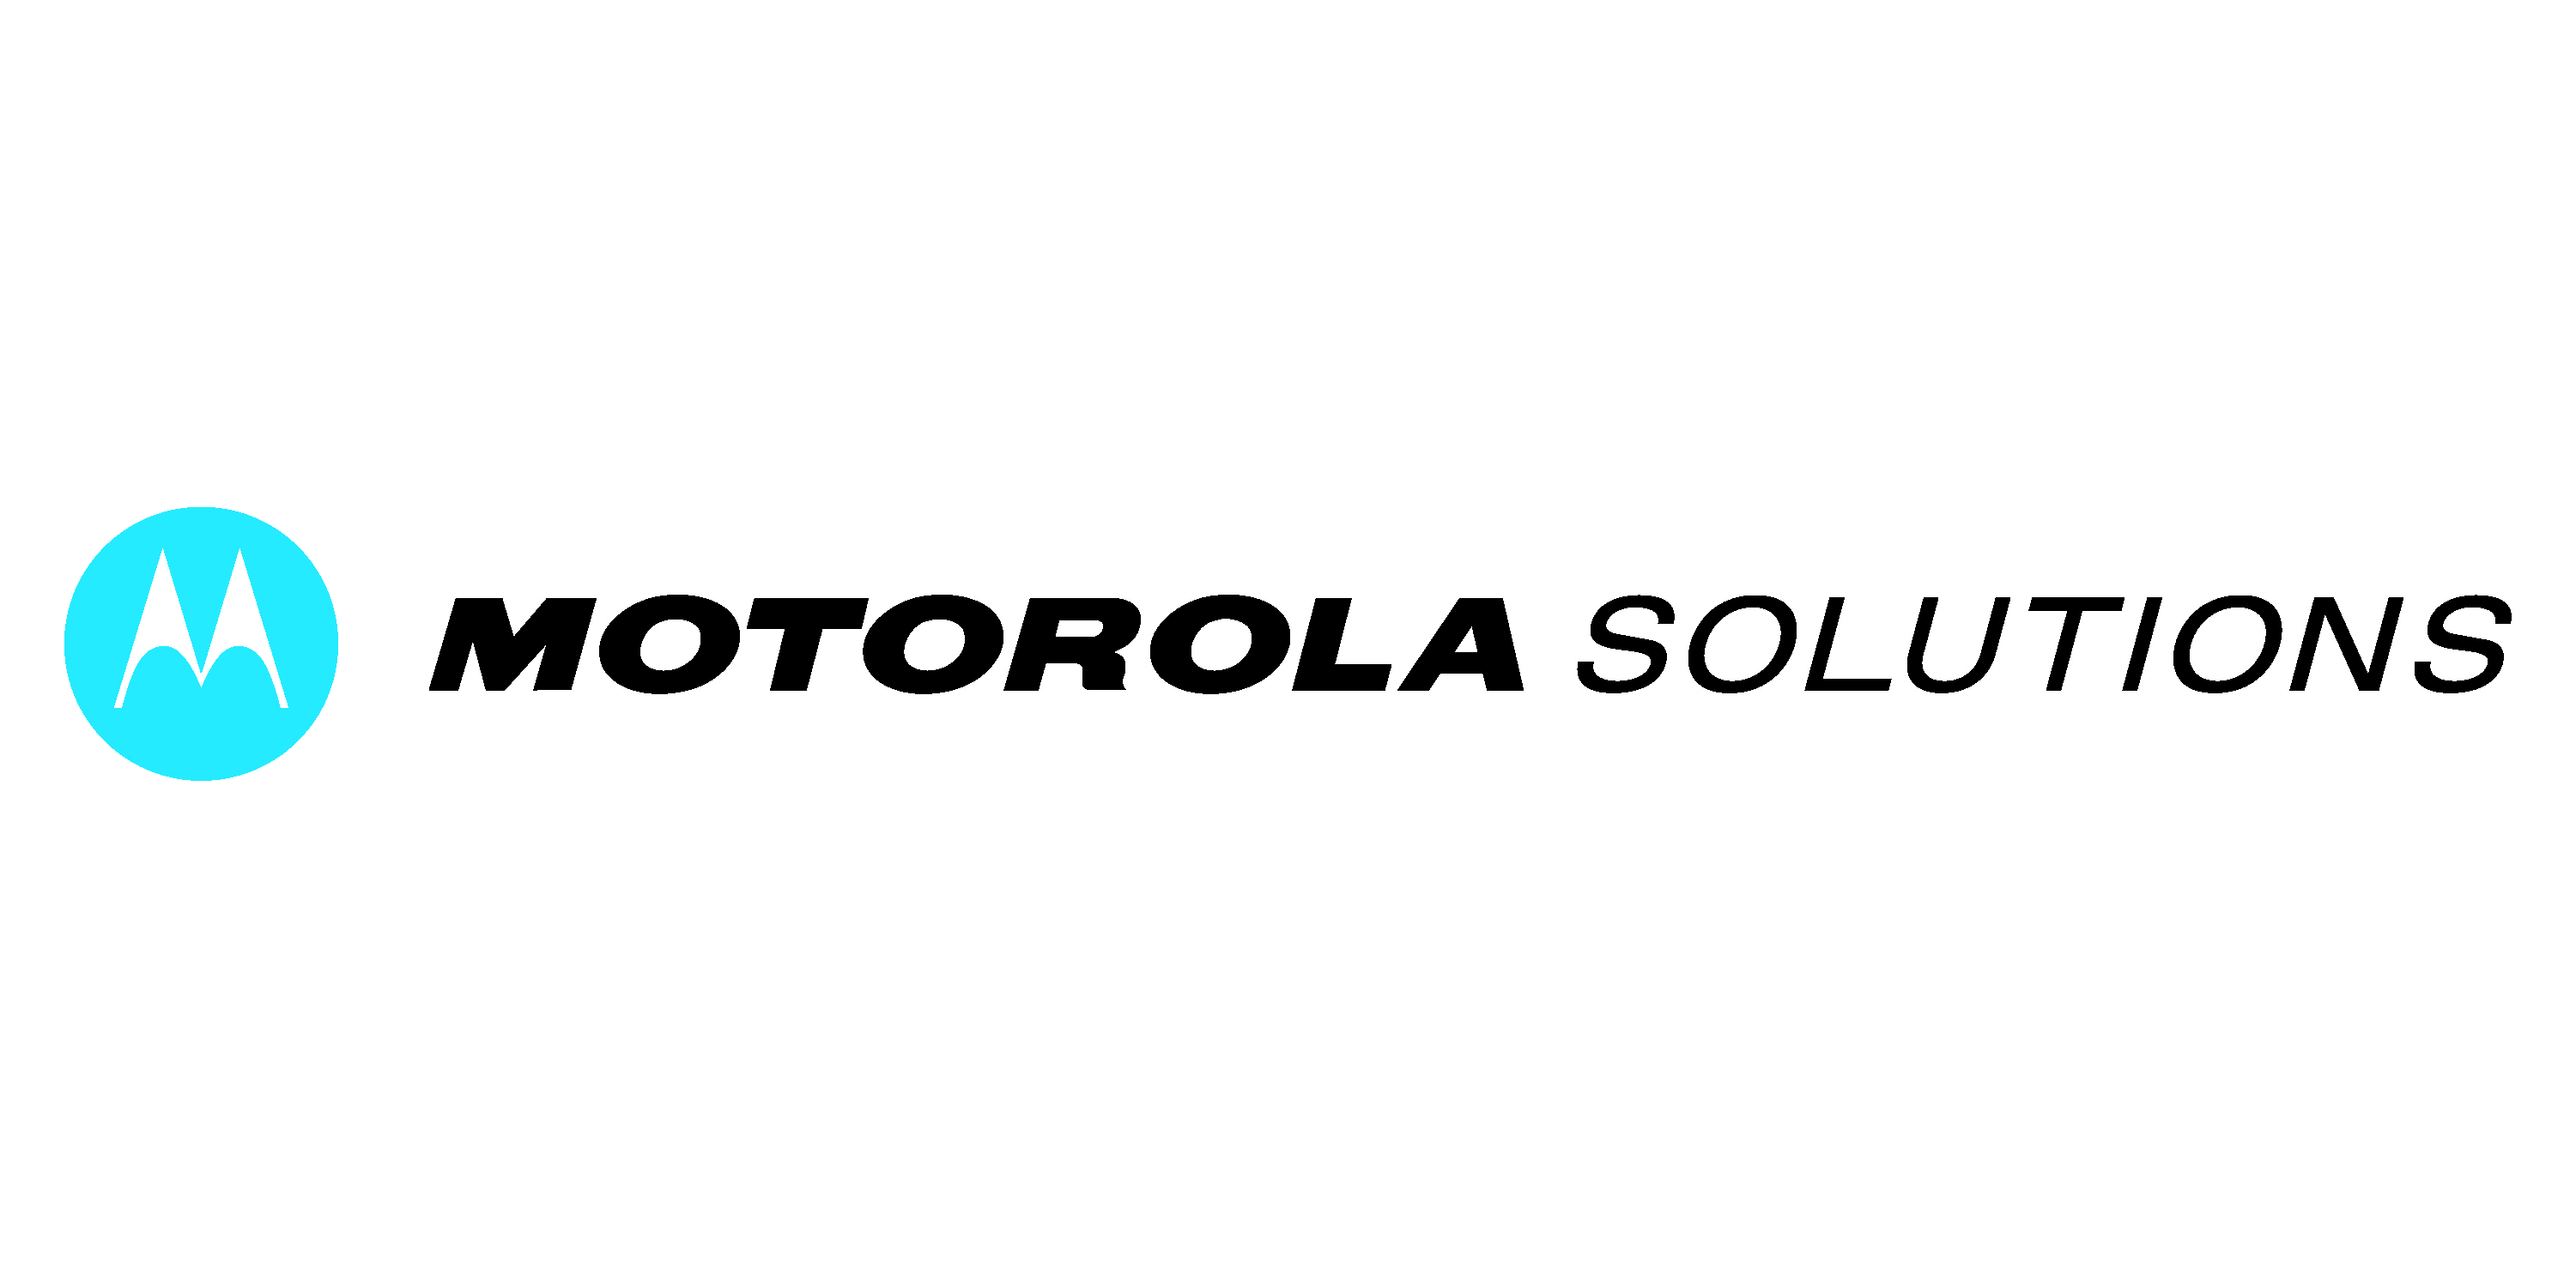 Motorola Solutions